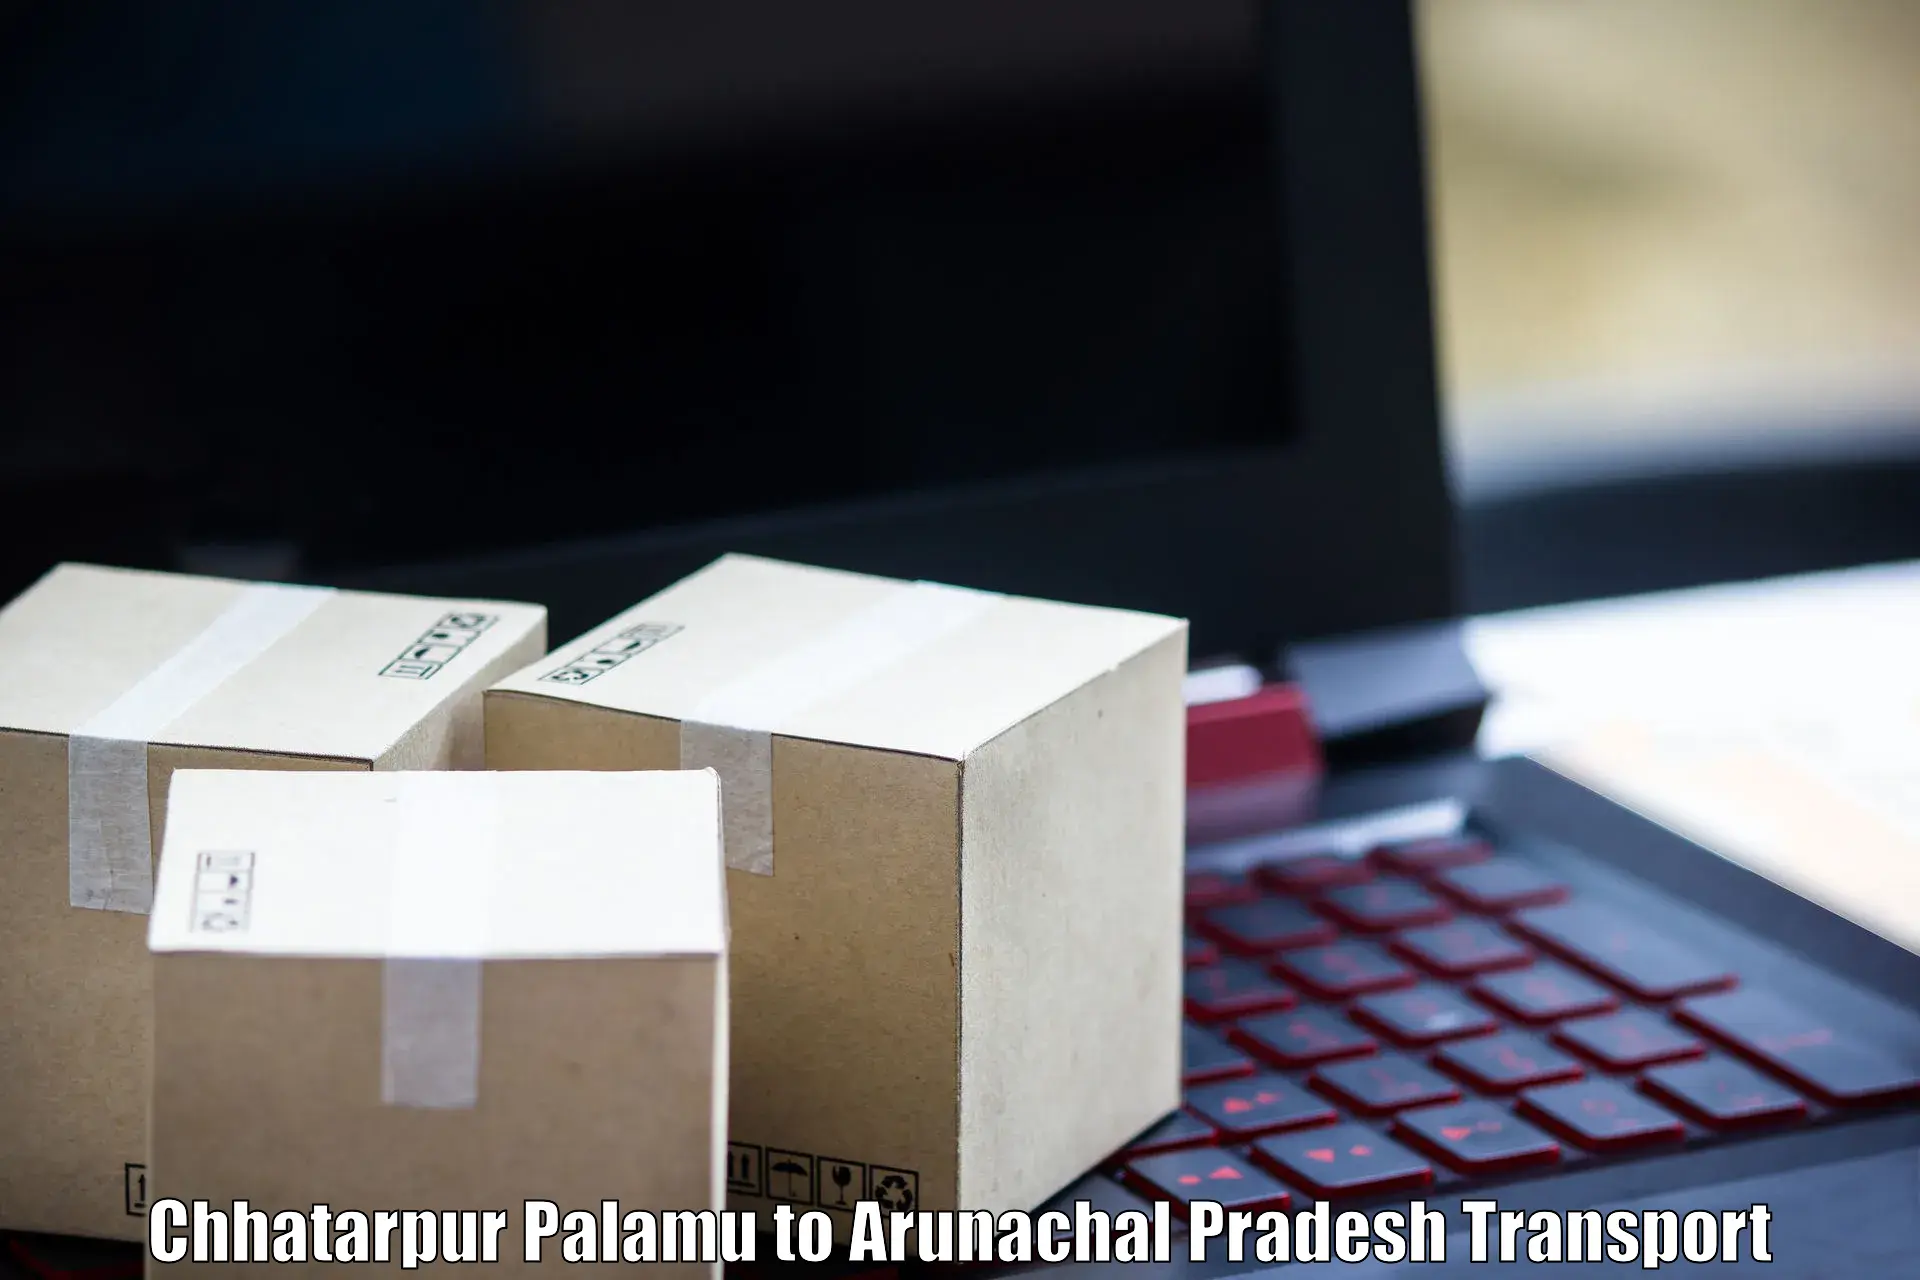 Daily parcel service transport Chhatarpur Palamu to Arunachal Pradesh